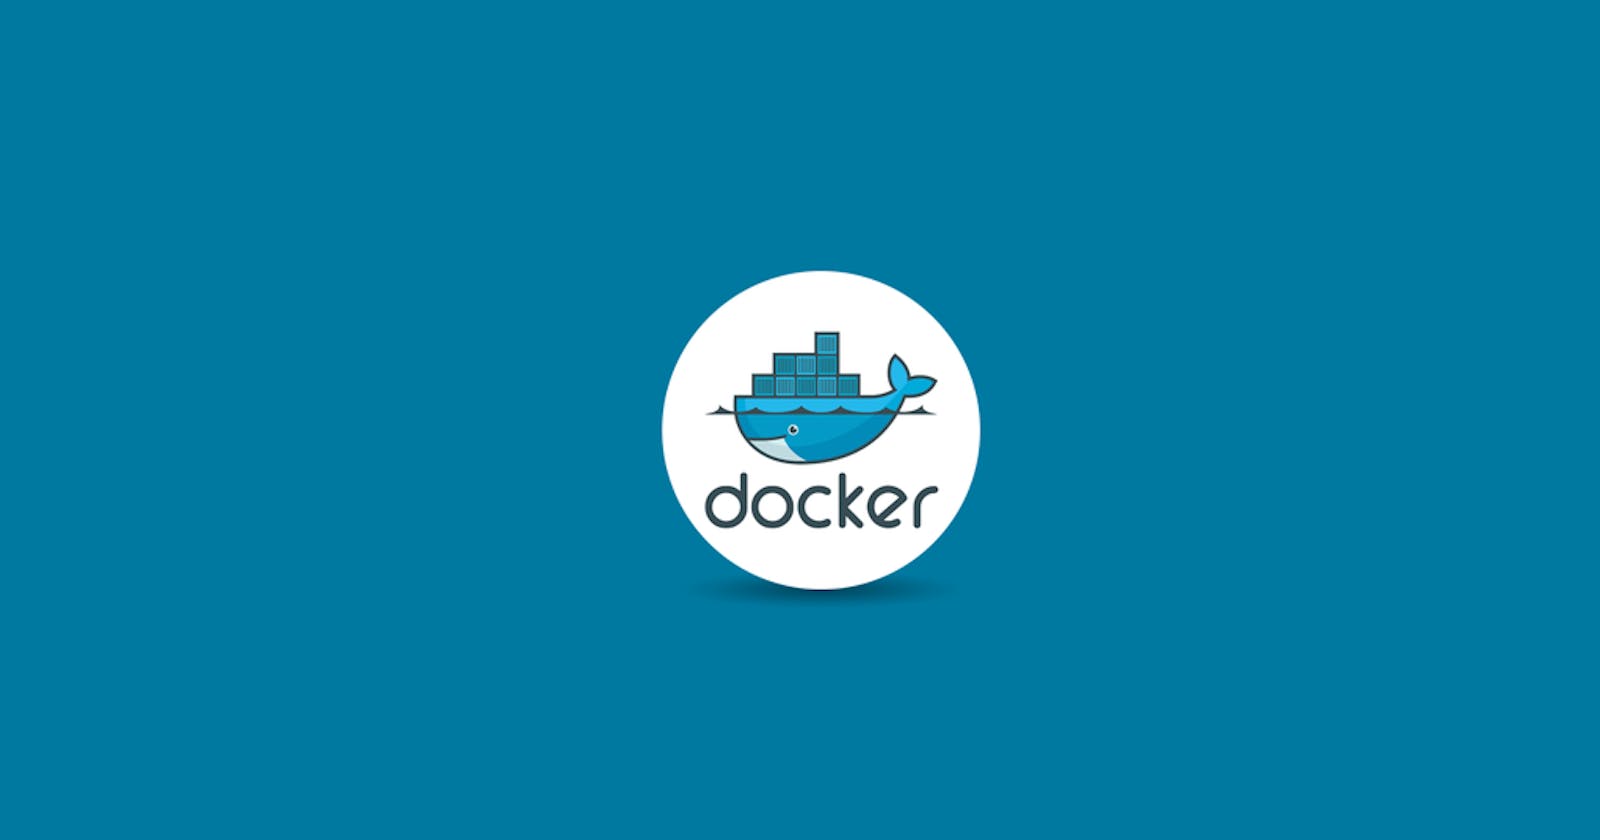 Everything Docker- Part 2